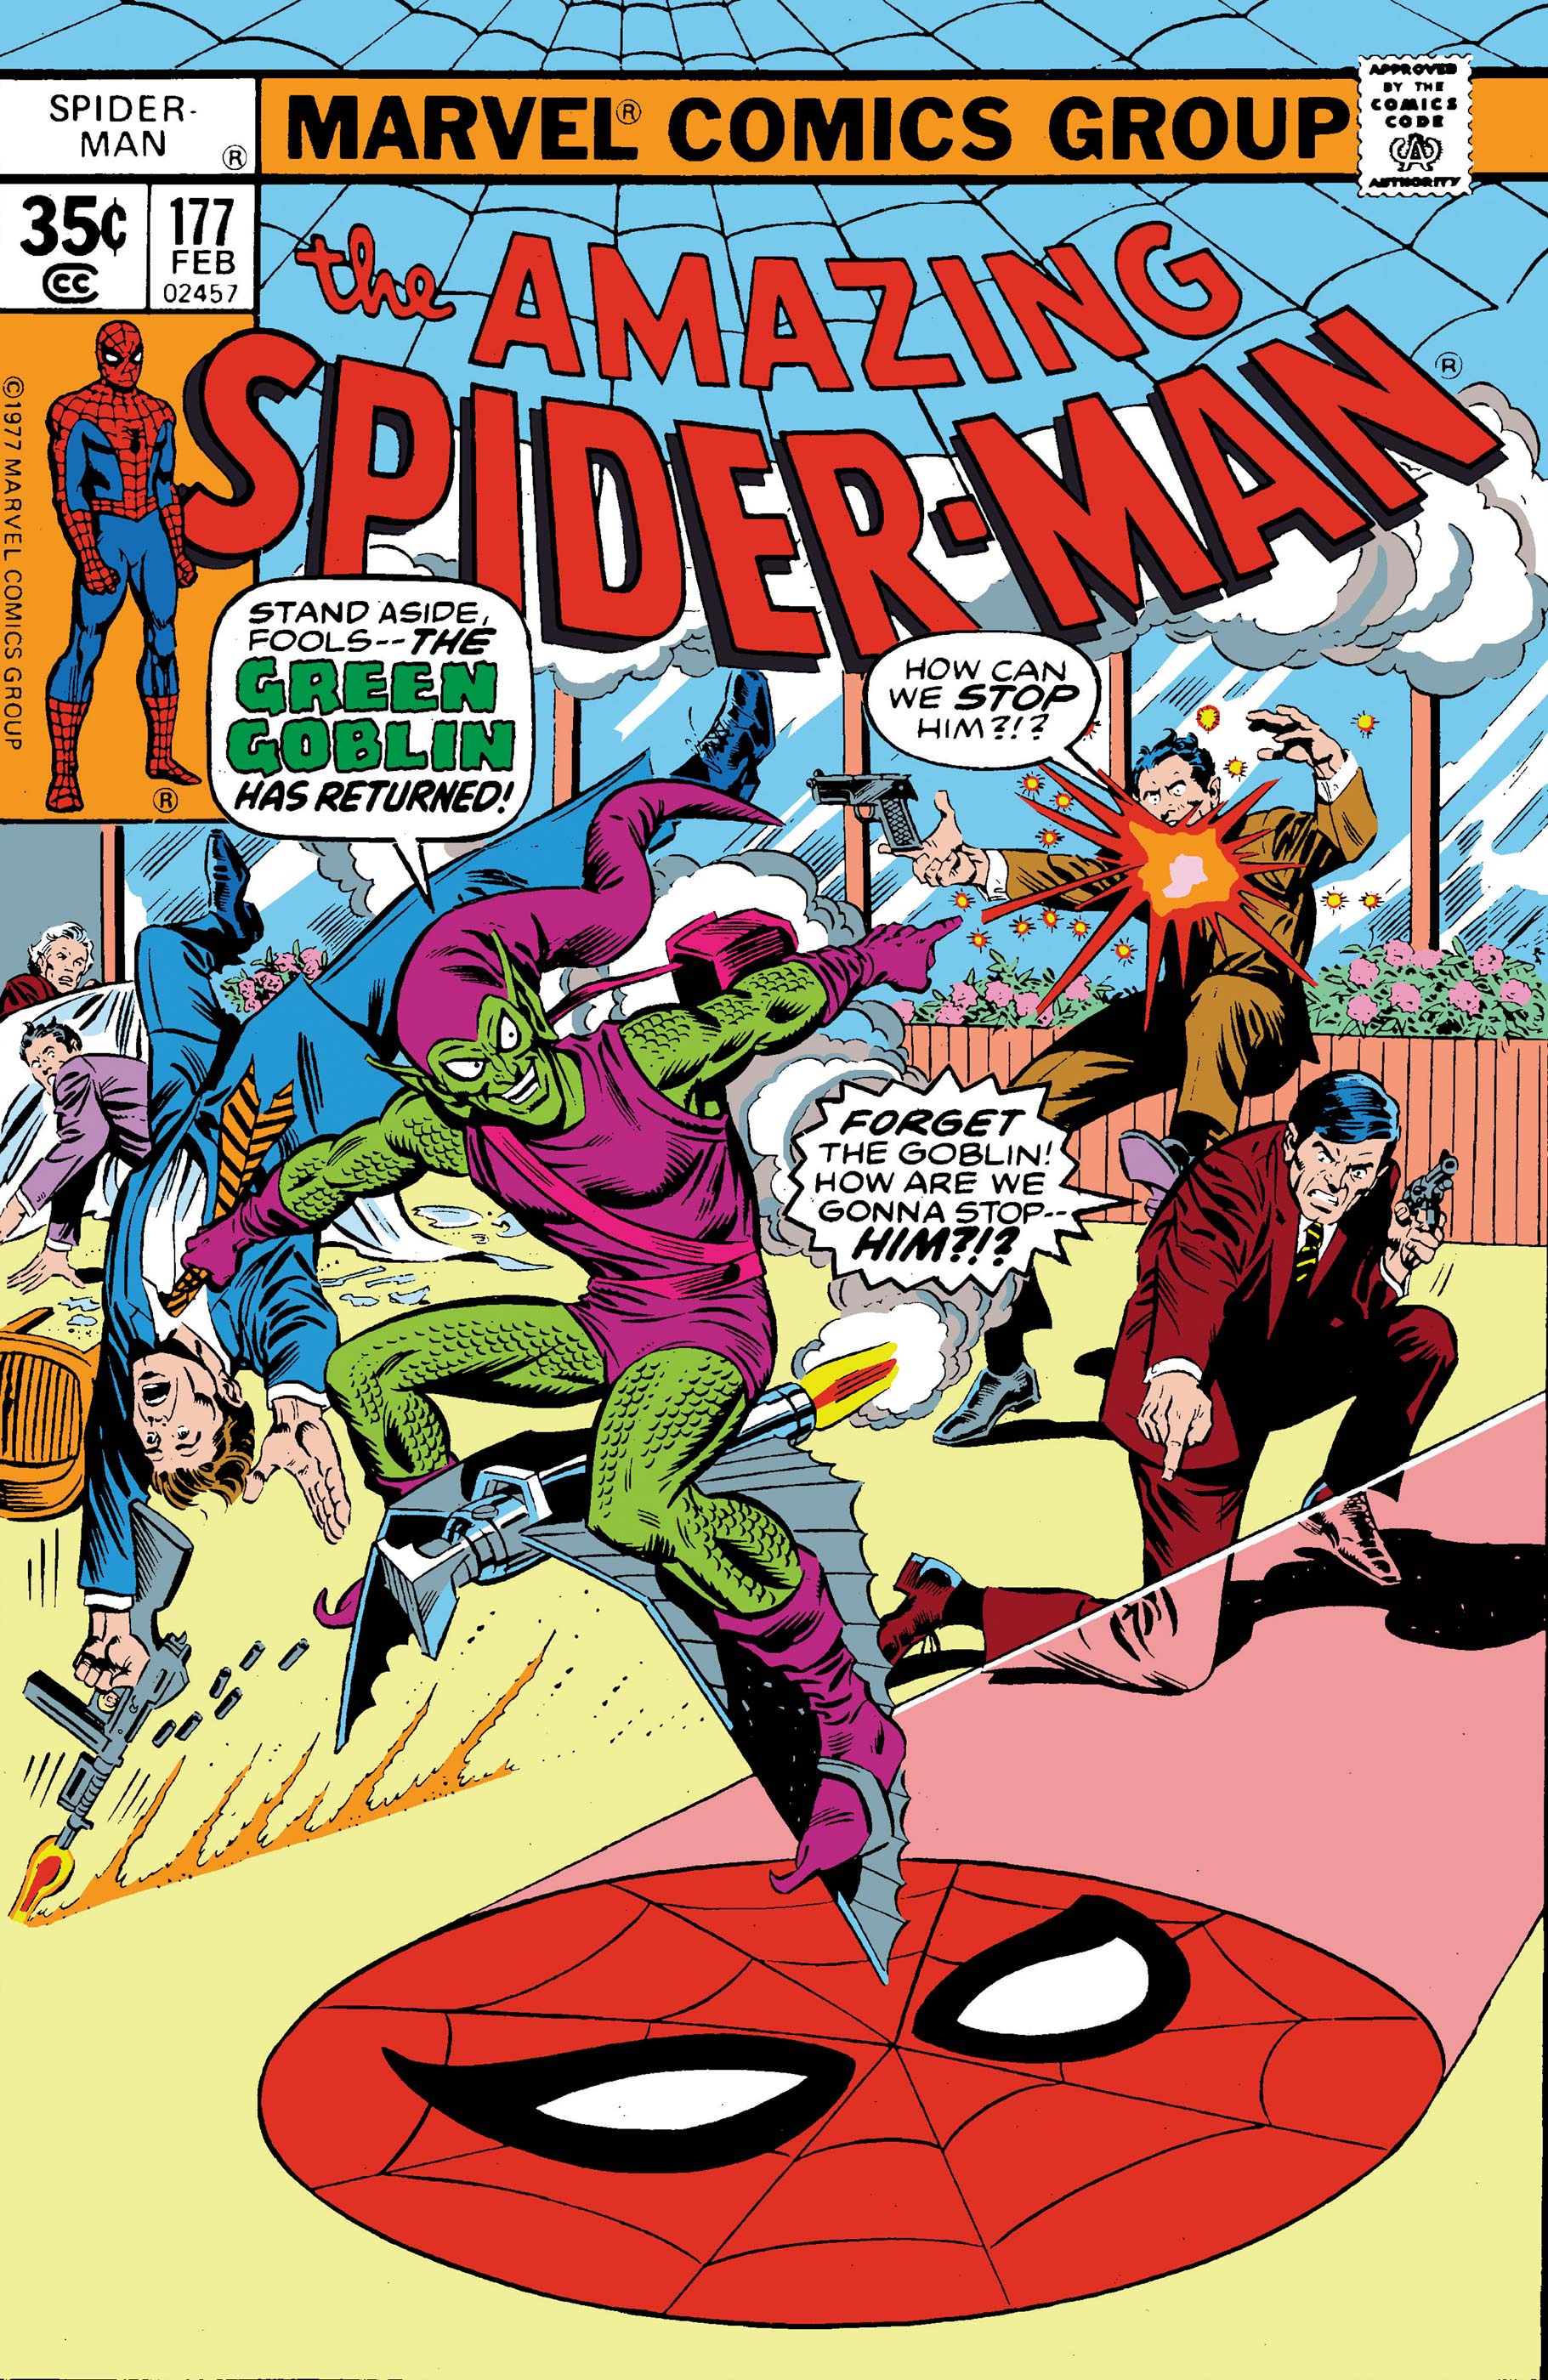 The Amazing Spider-Man (1963) #177